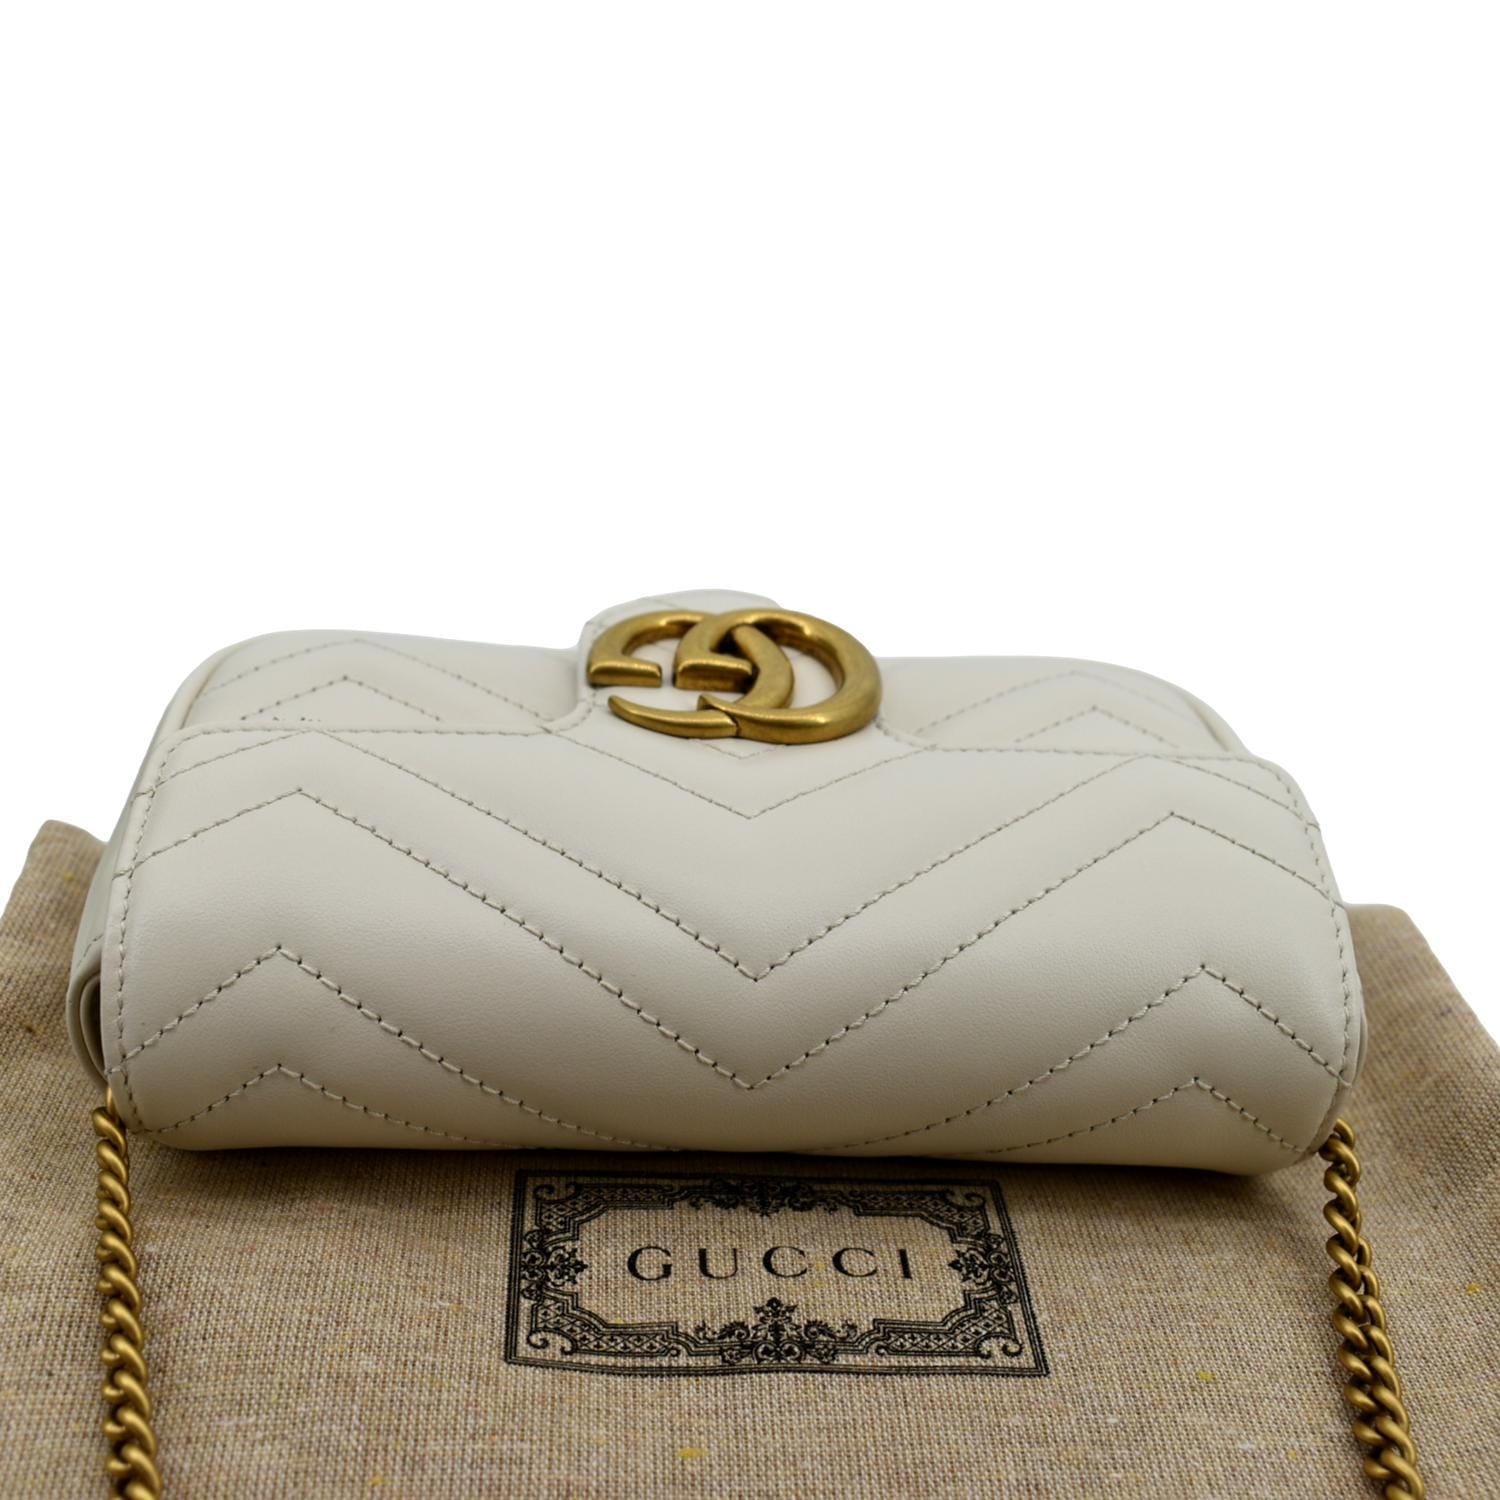 Gucci GG Marmont Super Mini Matelasse Leather Bag